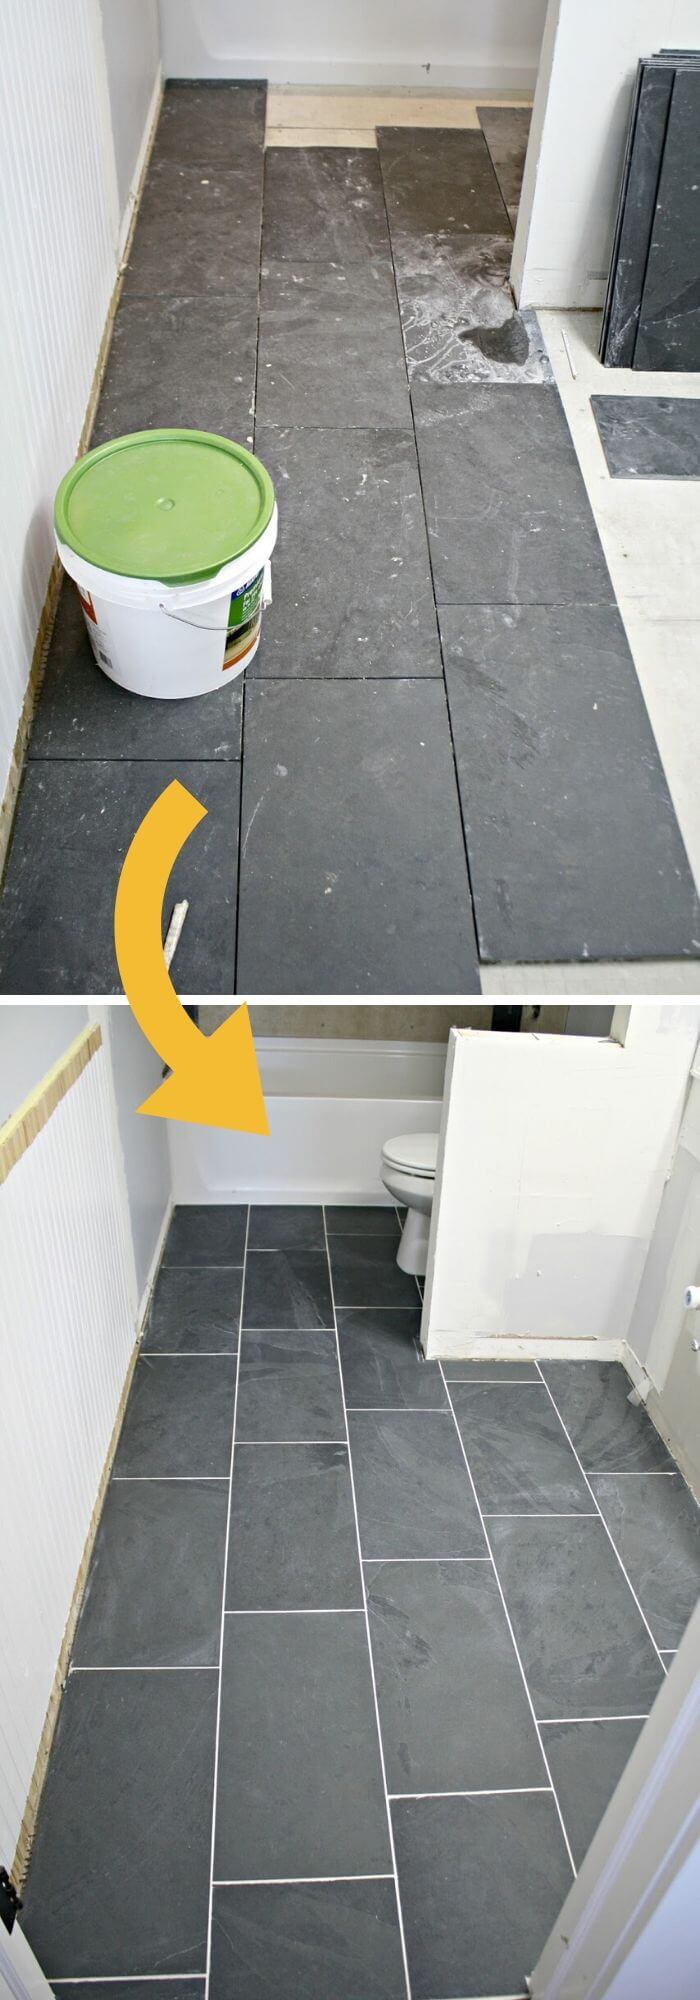 4 bathroom flooring ideas